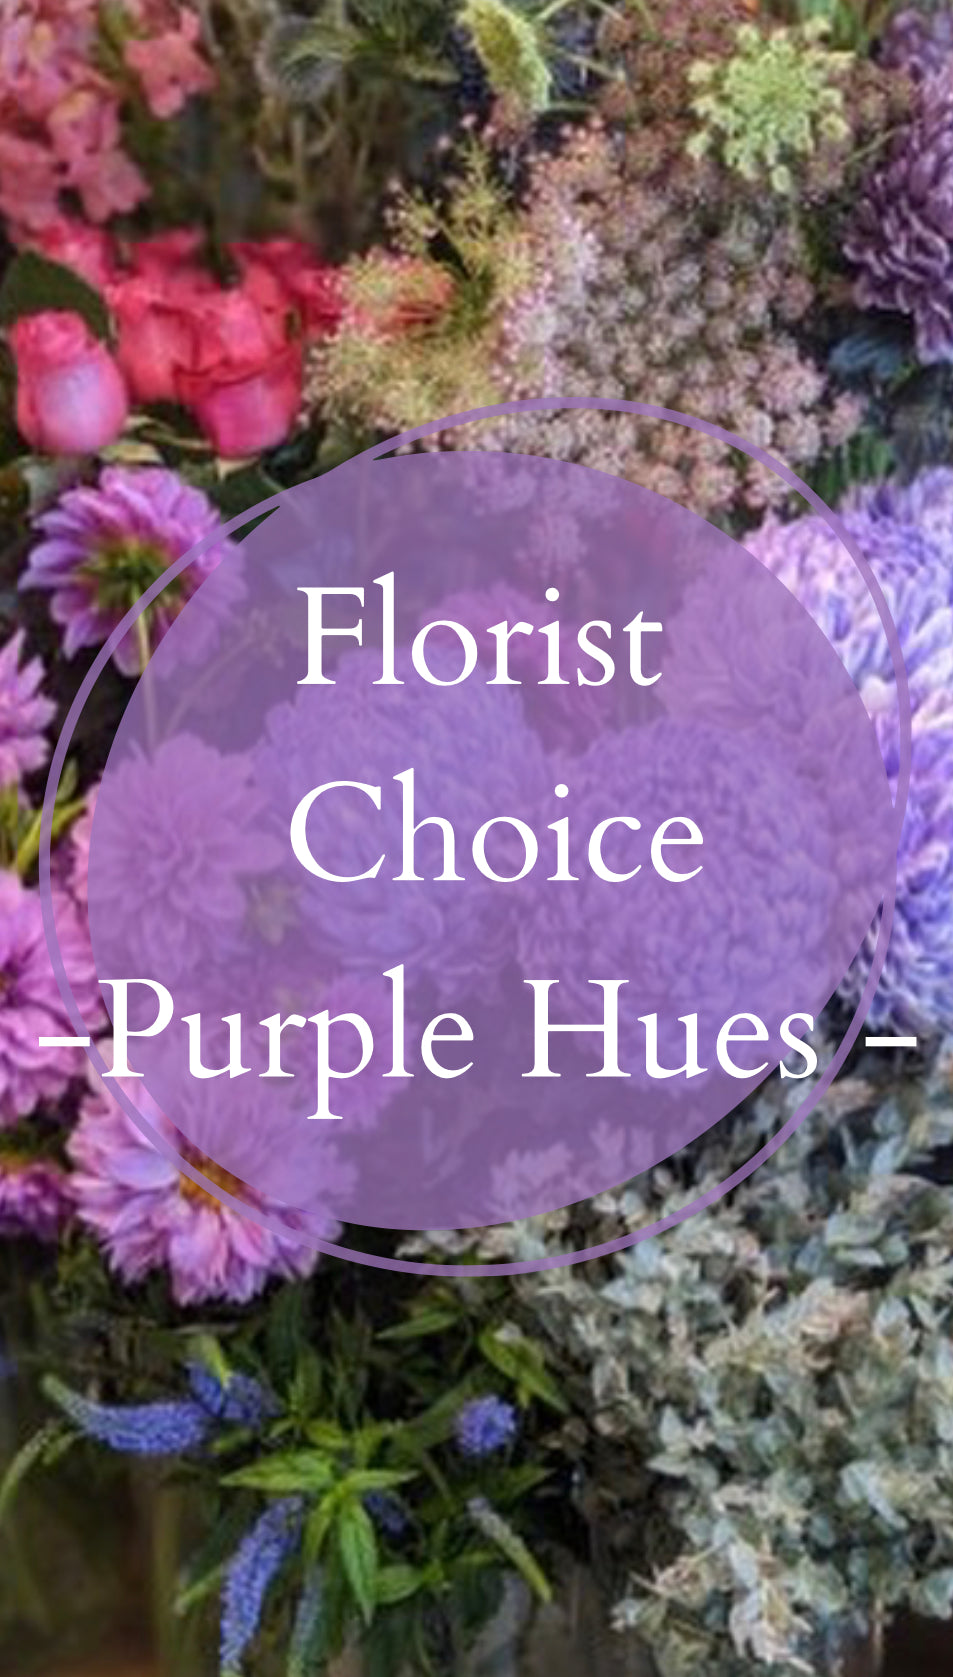 Florist Choice - Purple Hues